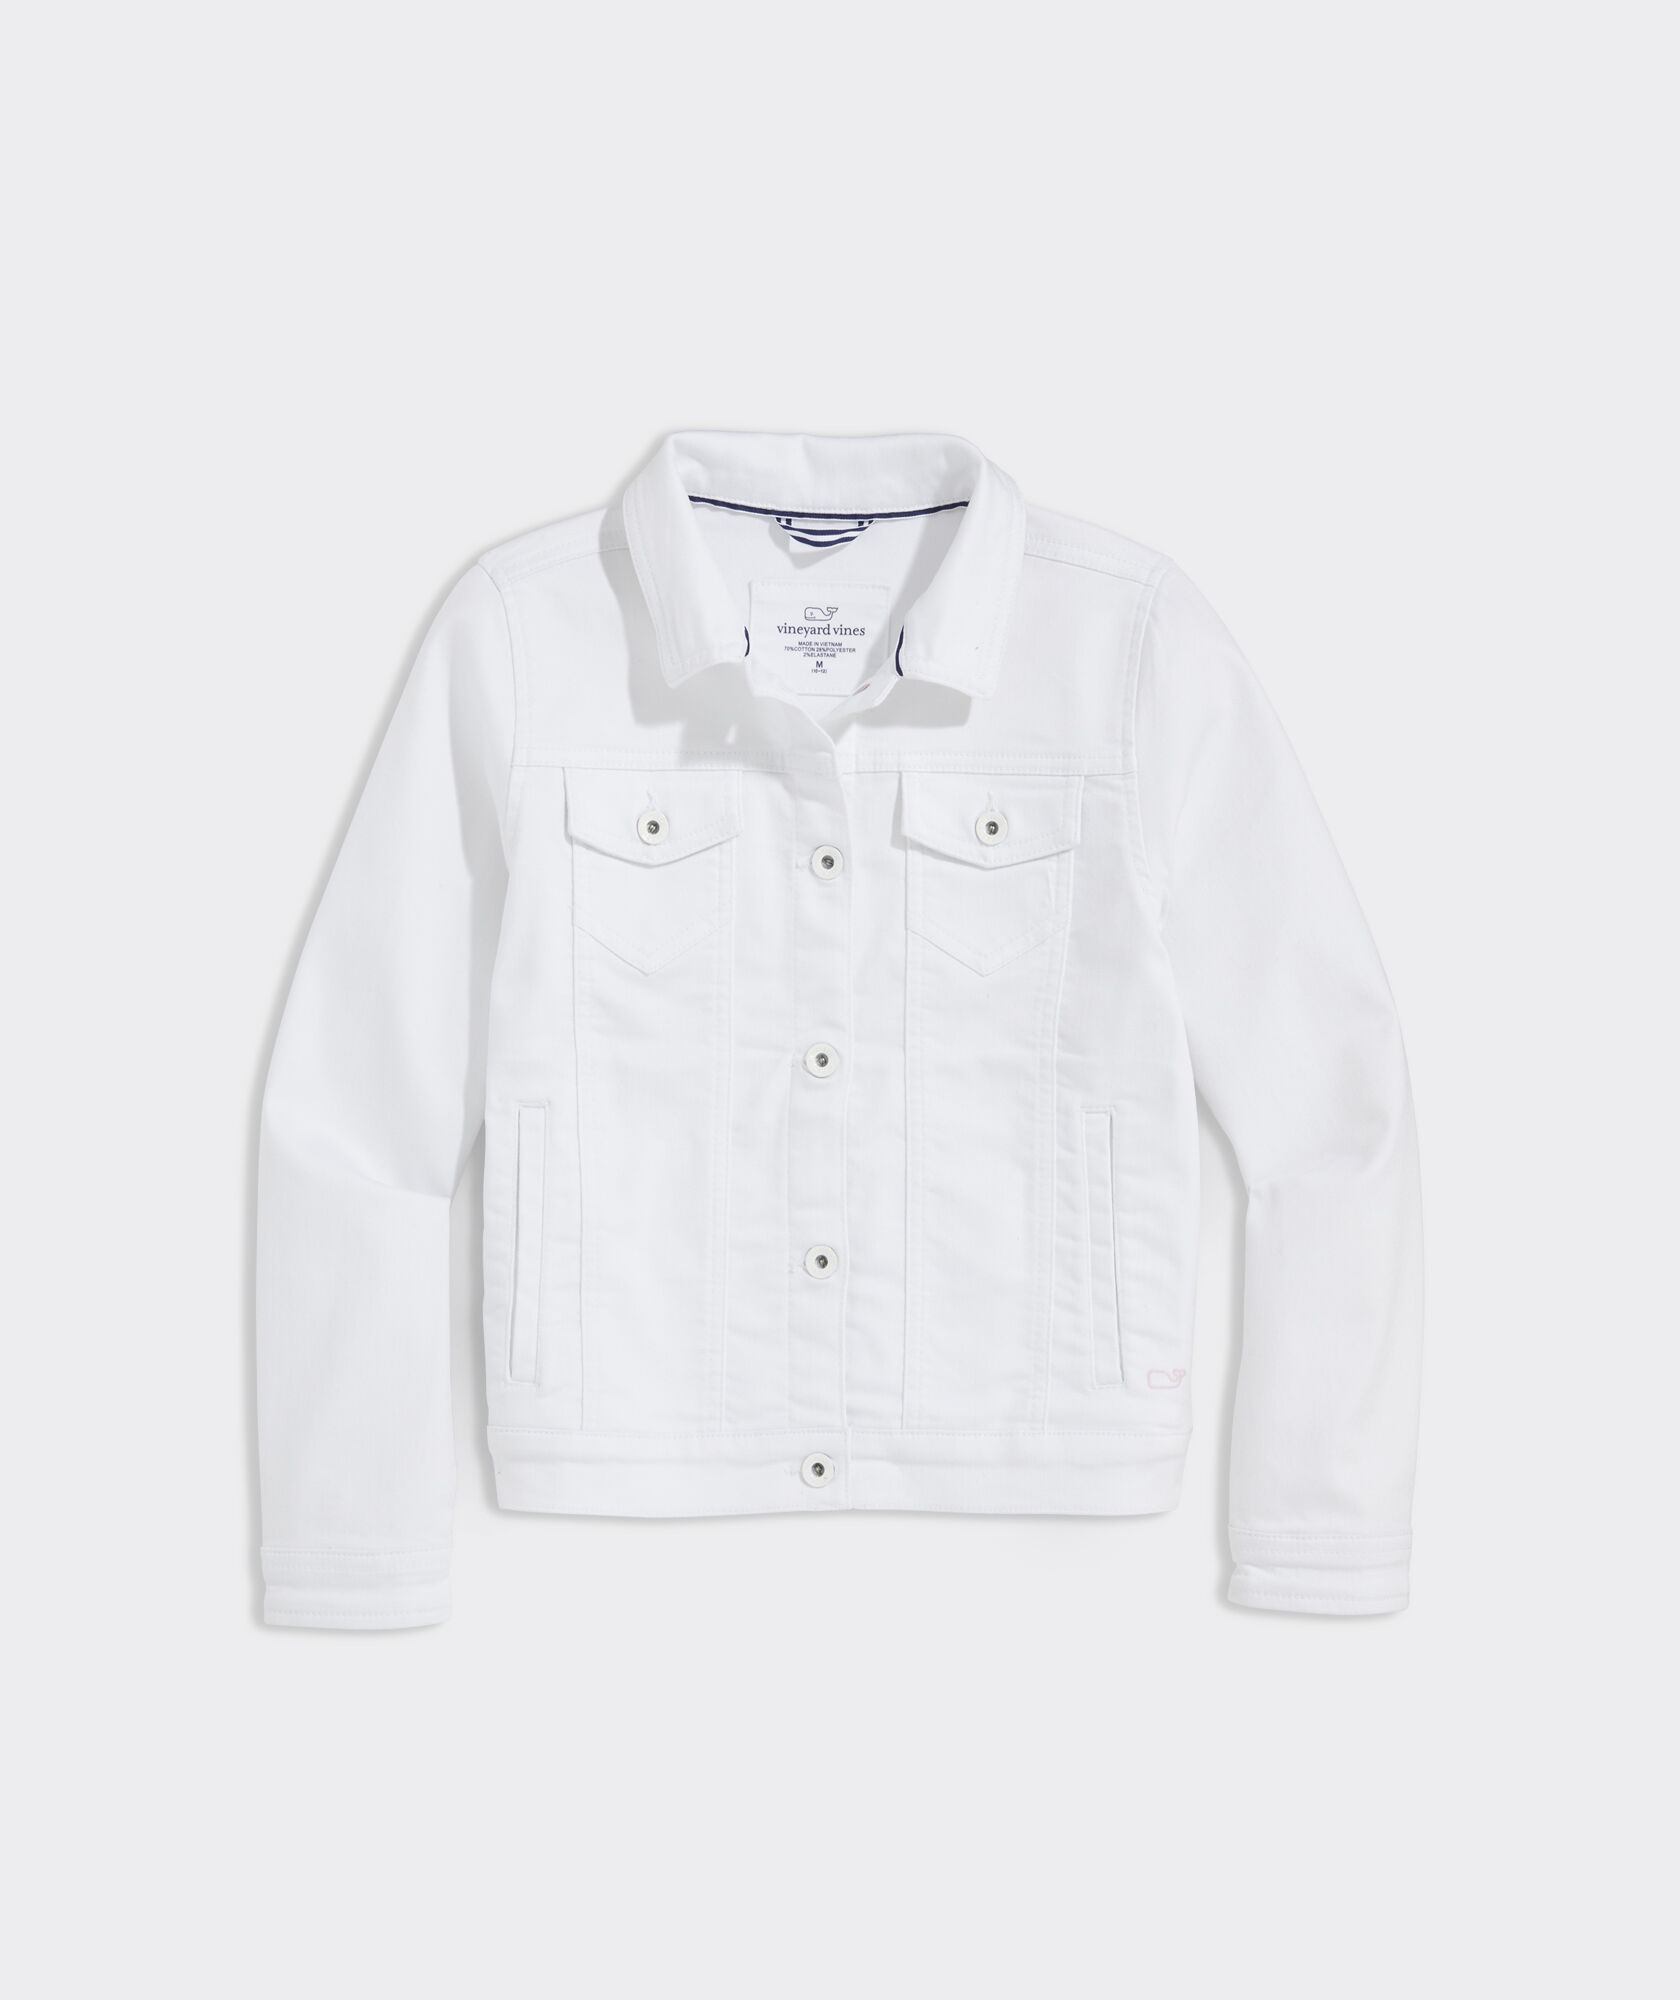 Stylie Modern Alternatives Full Sleeve Solid Boys & Girls Denim Jacket White  color Stylish Denim Jacket for Boys and Girls (2-3 Years) : Amazon.in:  Fashion